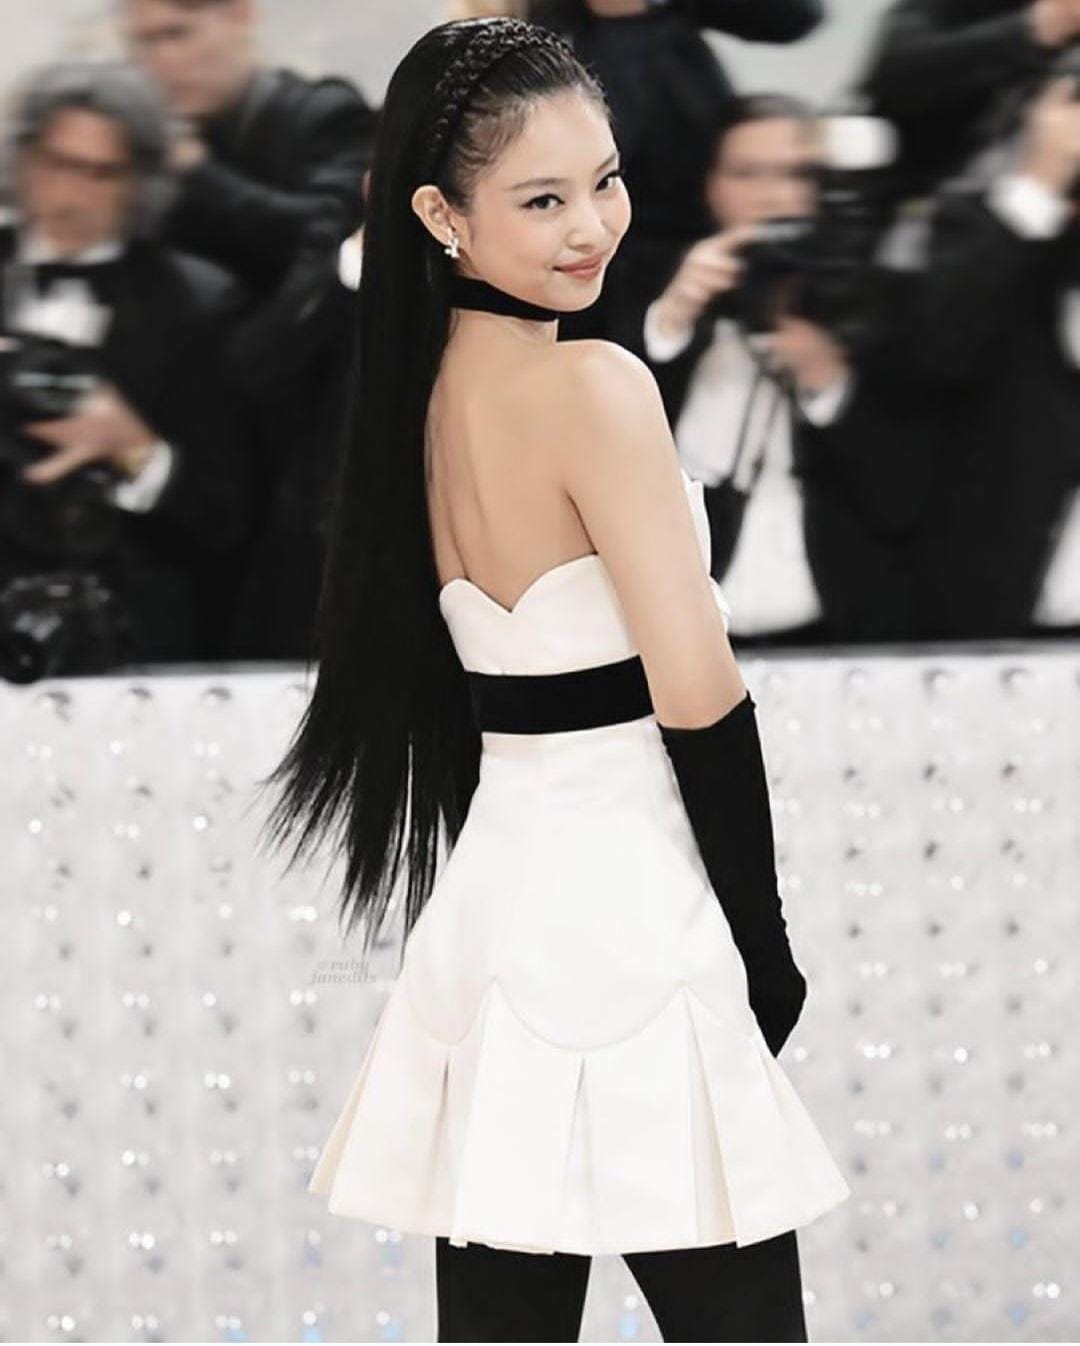 Jennie Kim wearing a classic black & white Chanel dress during Paris Fashion Week.